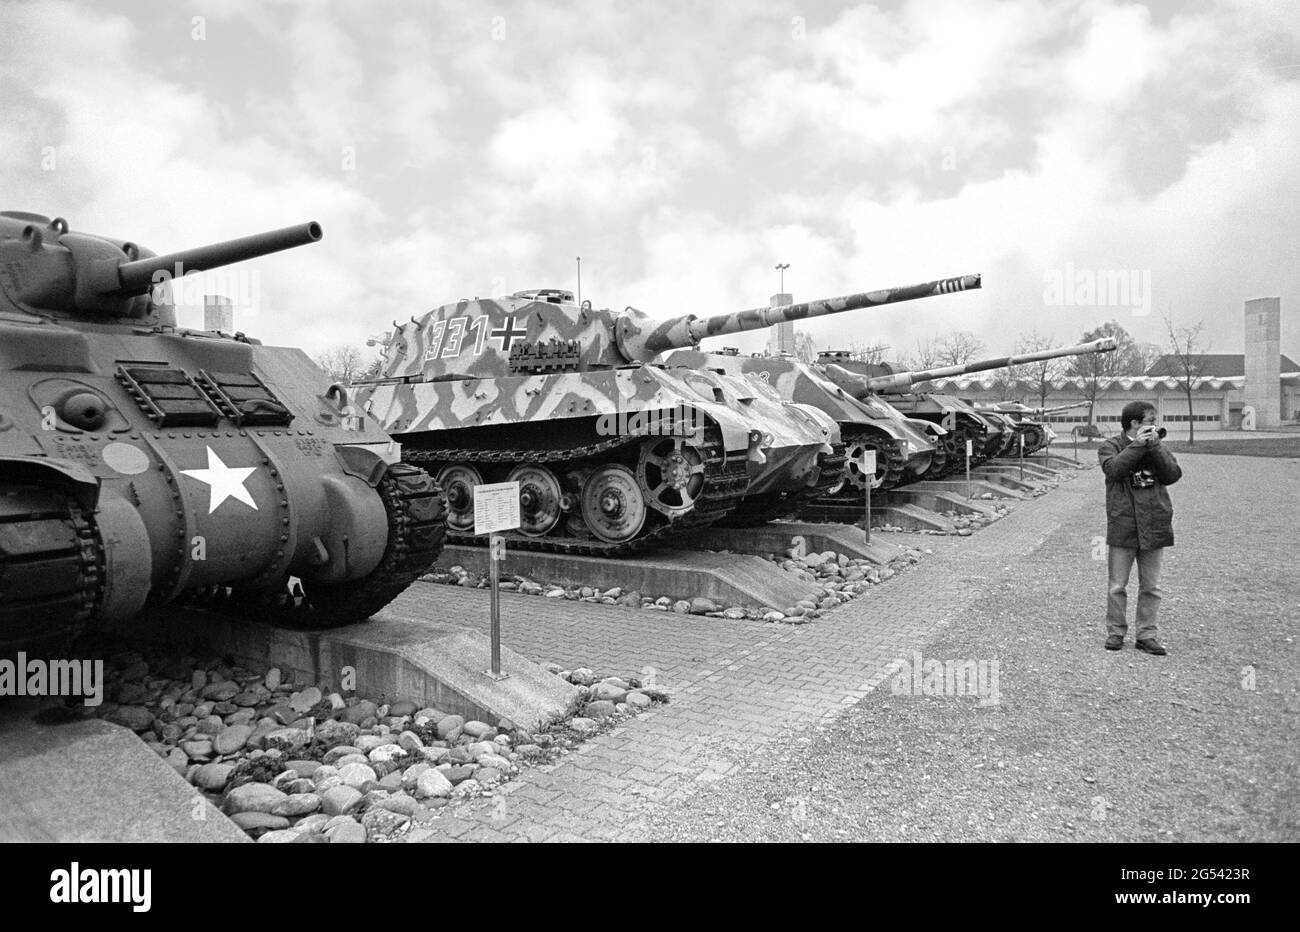 Switzerland, the tank museum in Thun (Bern), World War II tanks: US Army Sherman and German Panzer VI auf B Tiger II (Königstiger). Stock Photo